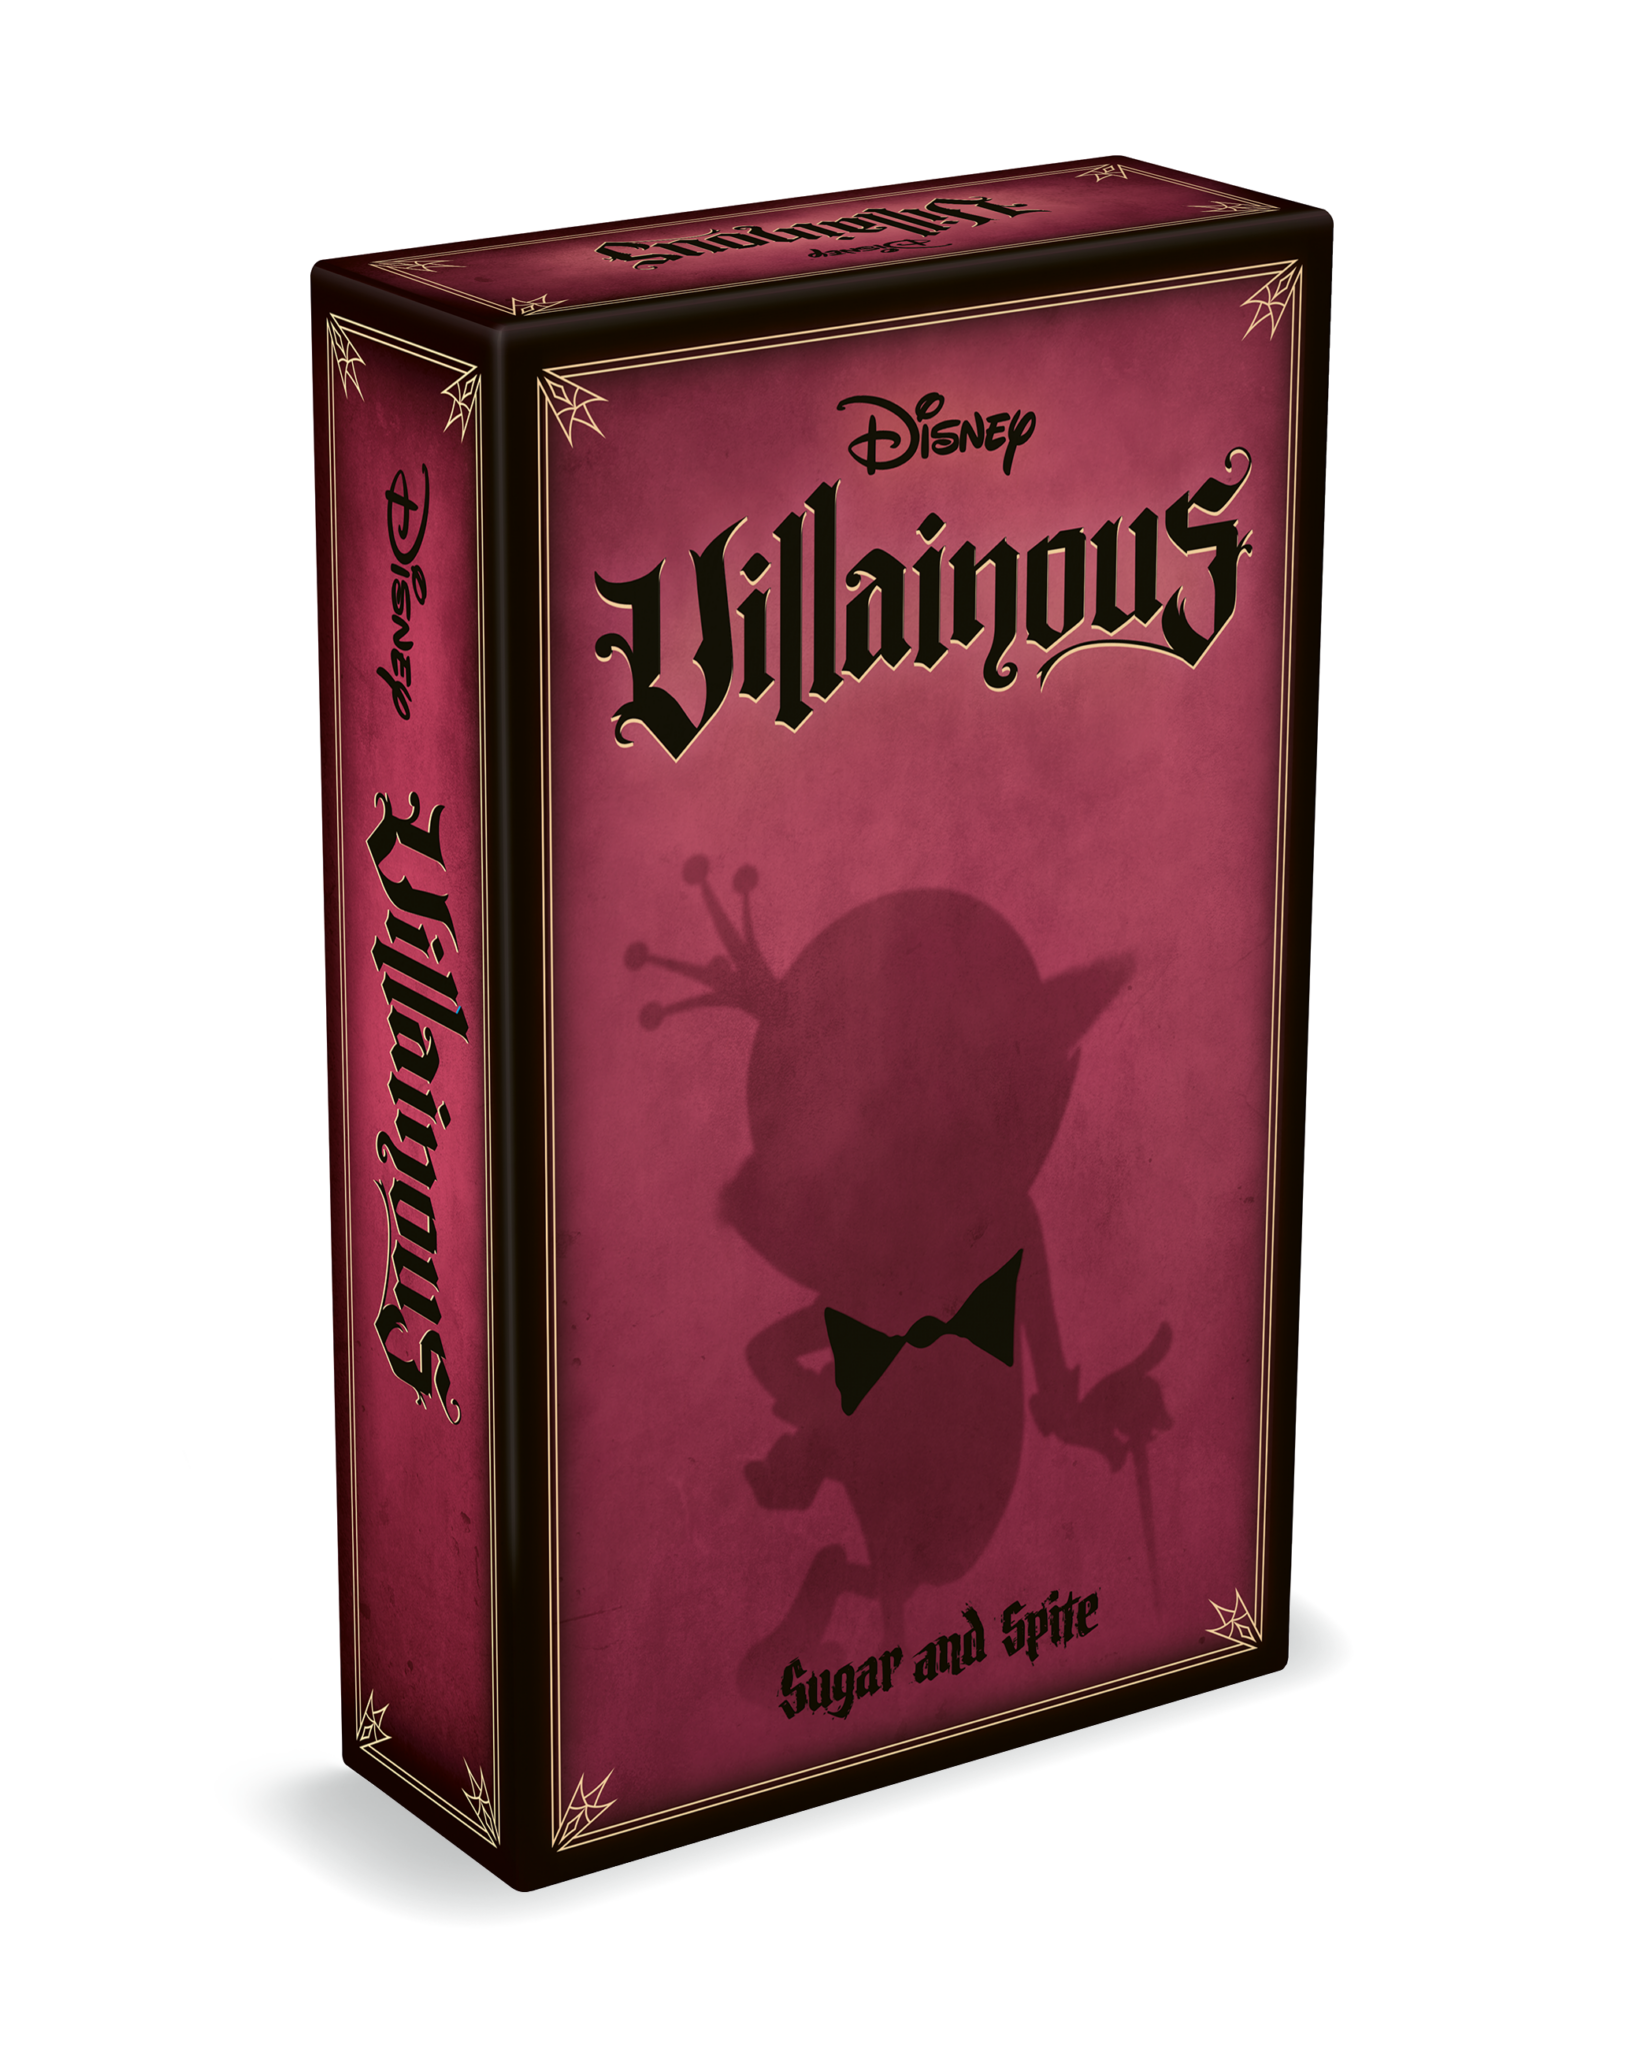 Disney Villainous Sugar & Spite cover